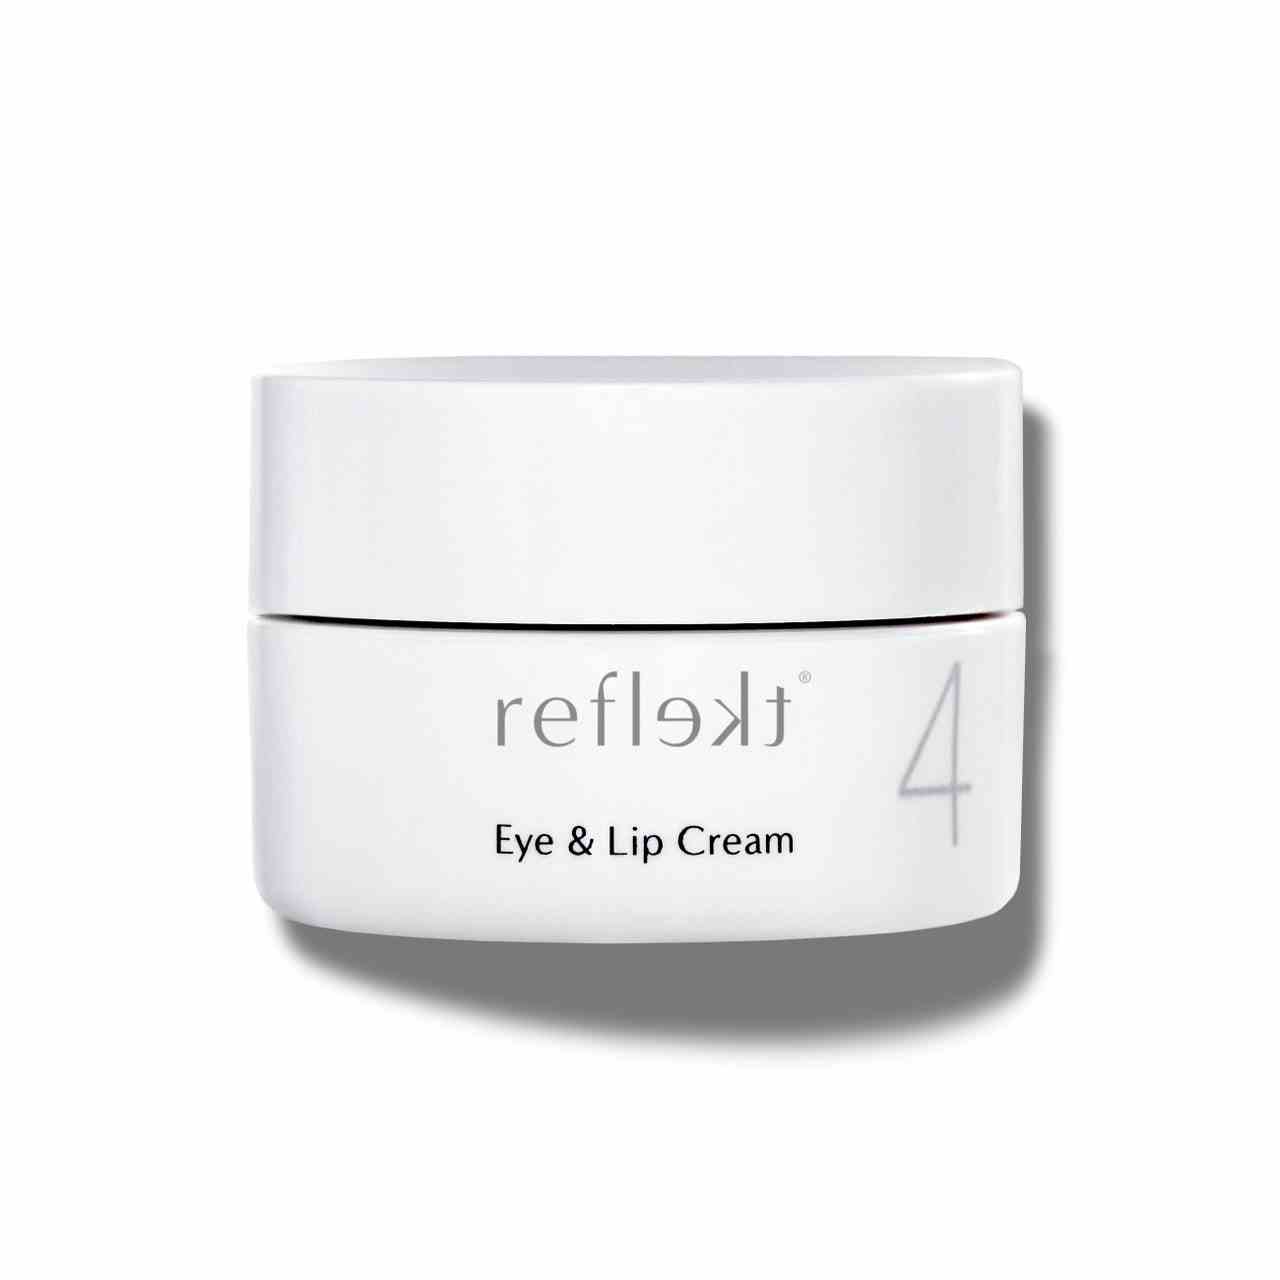 Reflekt Eye & Lip Cream white jar on white background